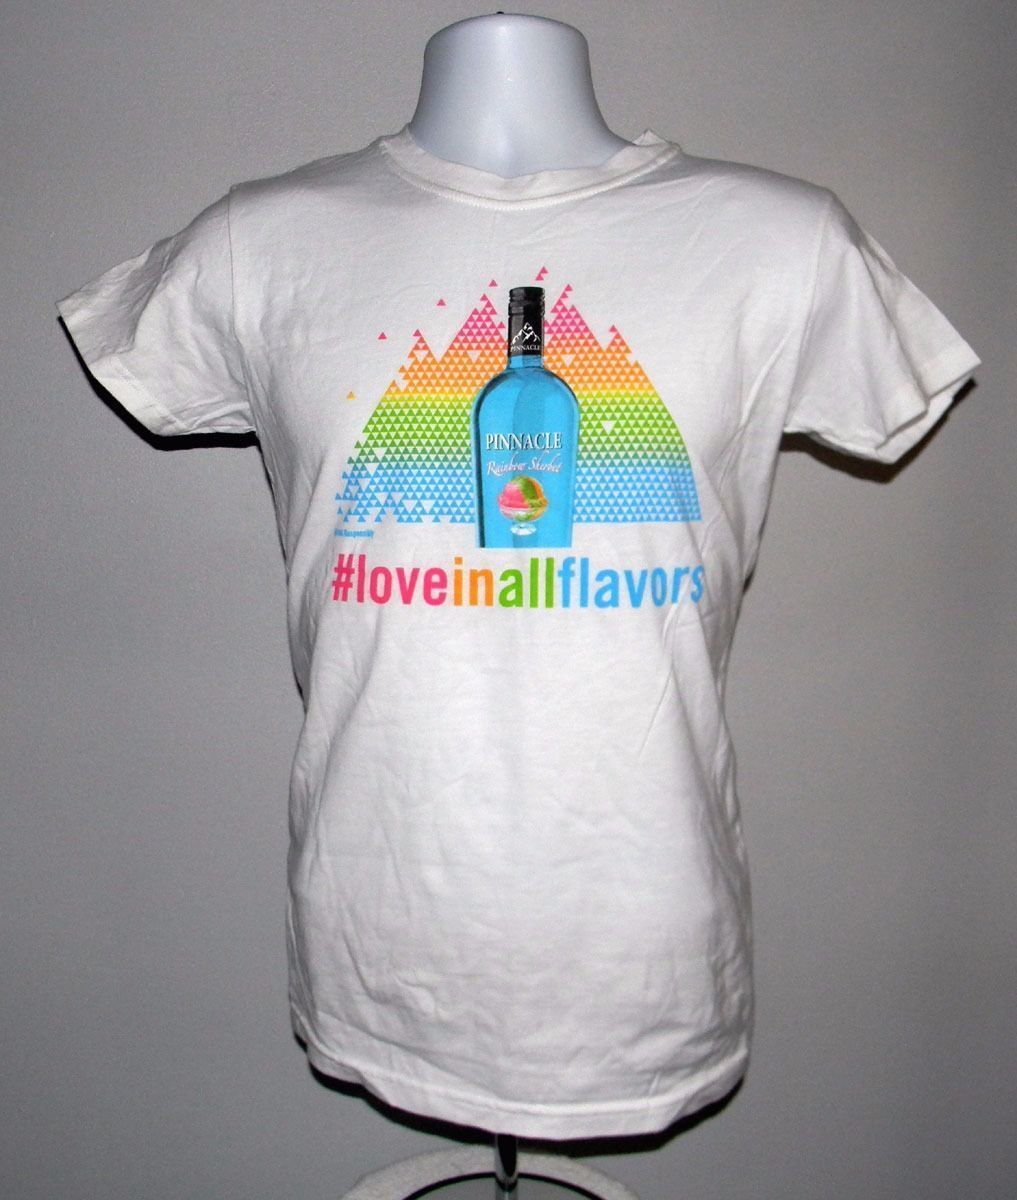 Pinnacle Rainbow Sherbet Vodka T Shirt Large #LOVEINALLFLAVORS Gay Pride - $21.73